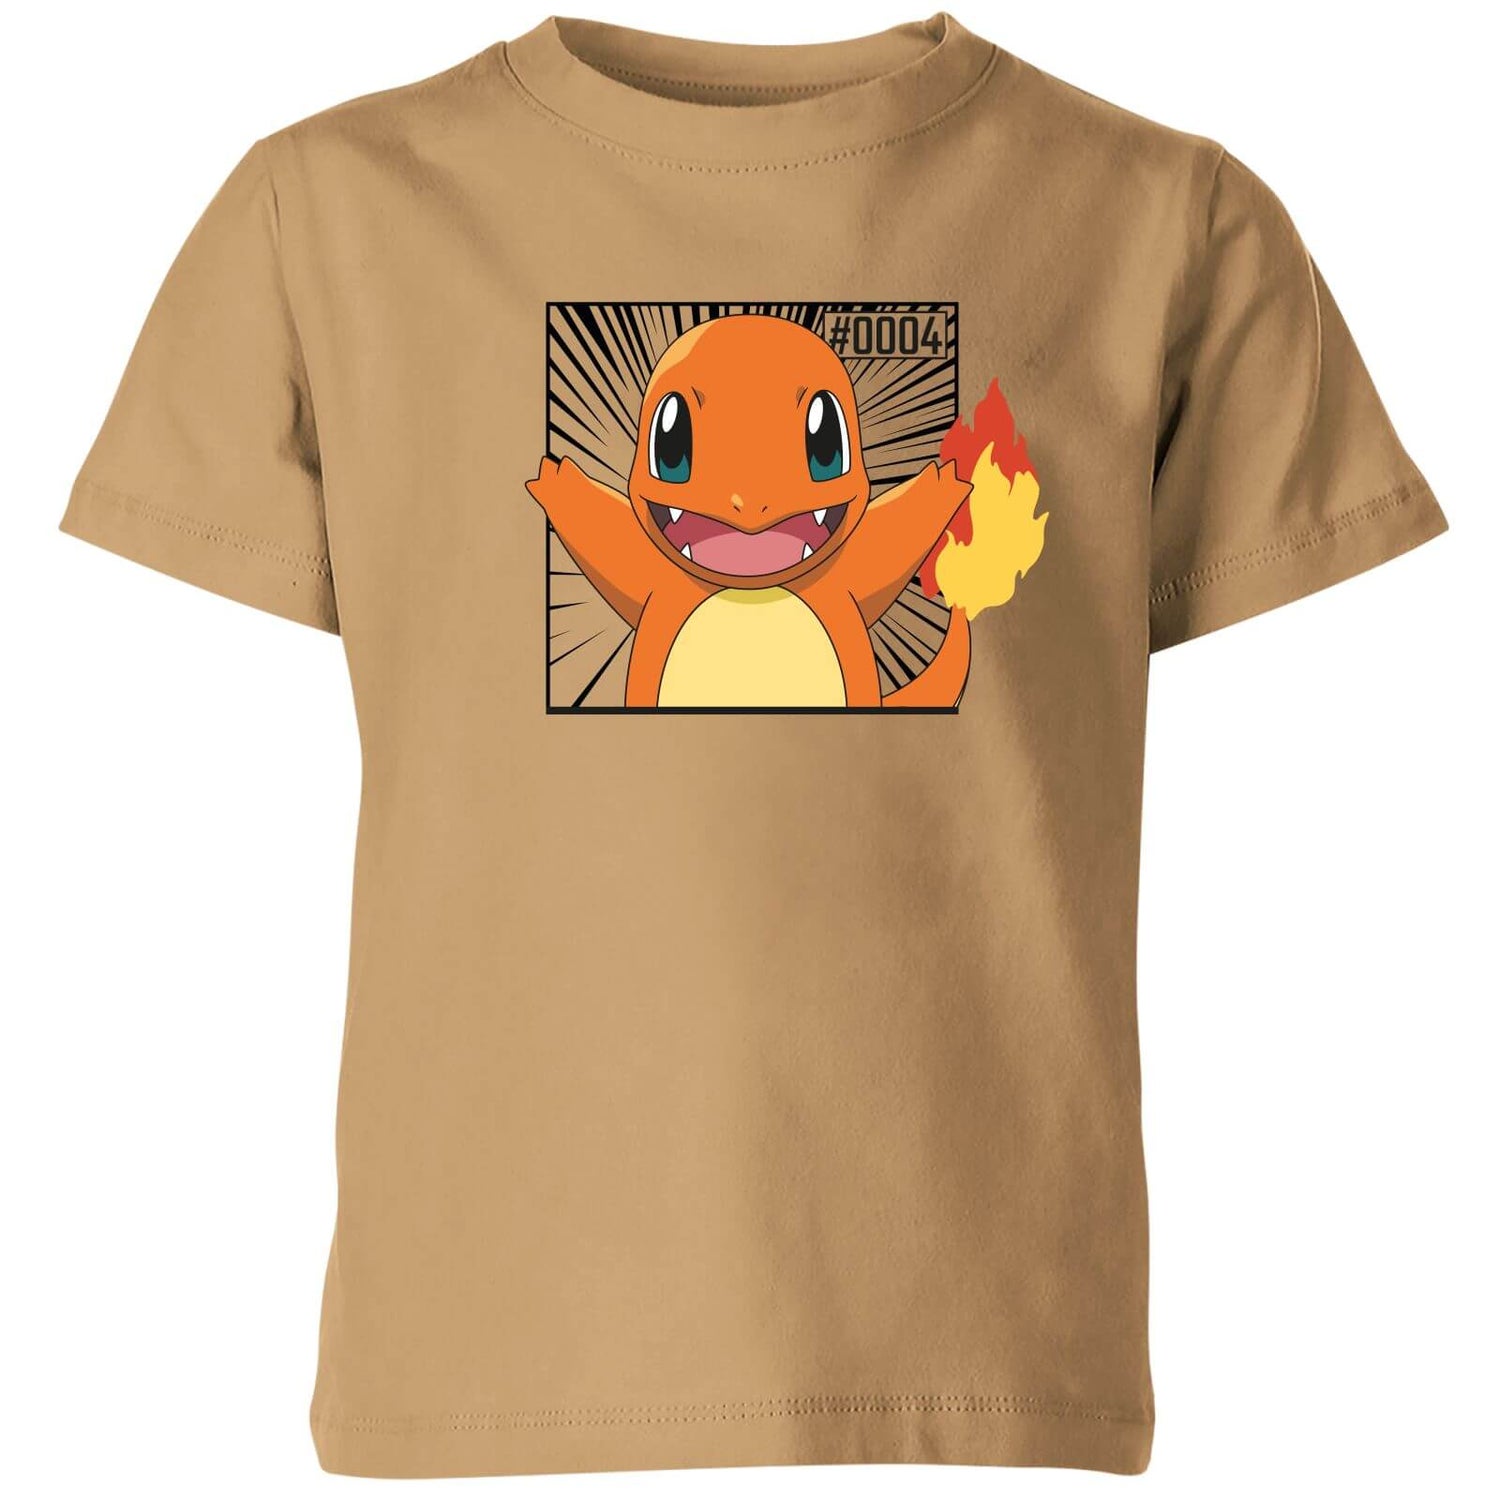 Pokémon Pokédex Charmander #0004 Kids' T-Shirt - Tan